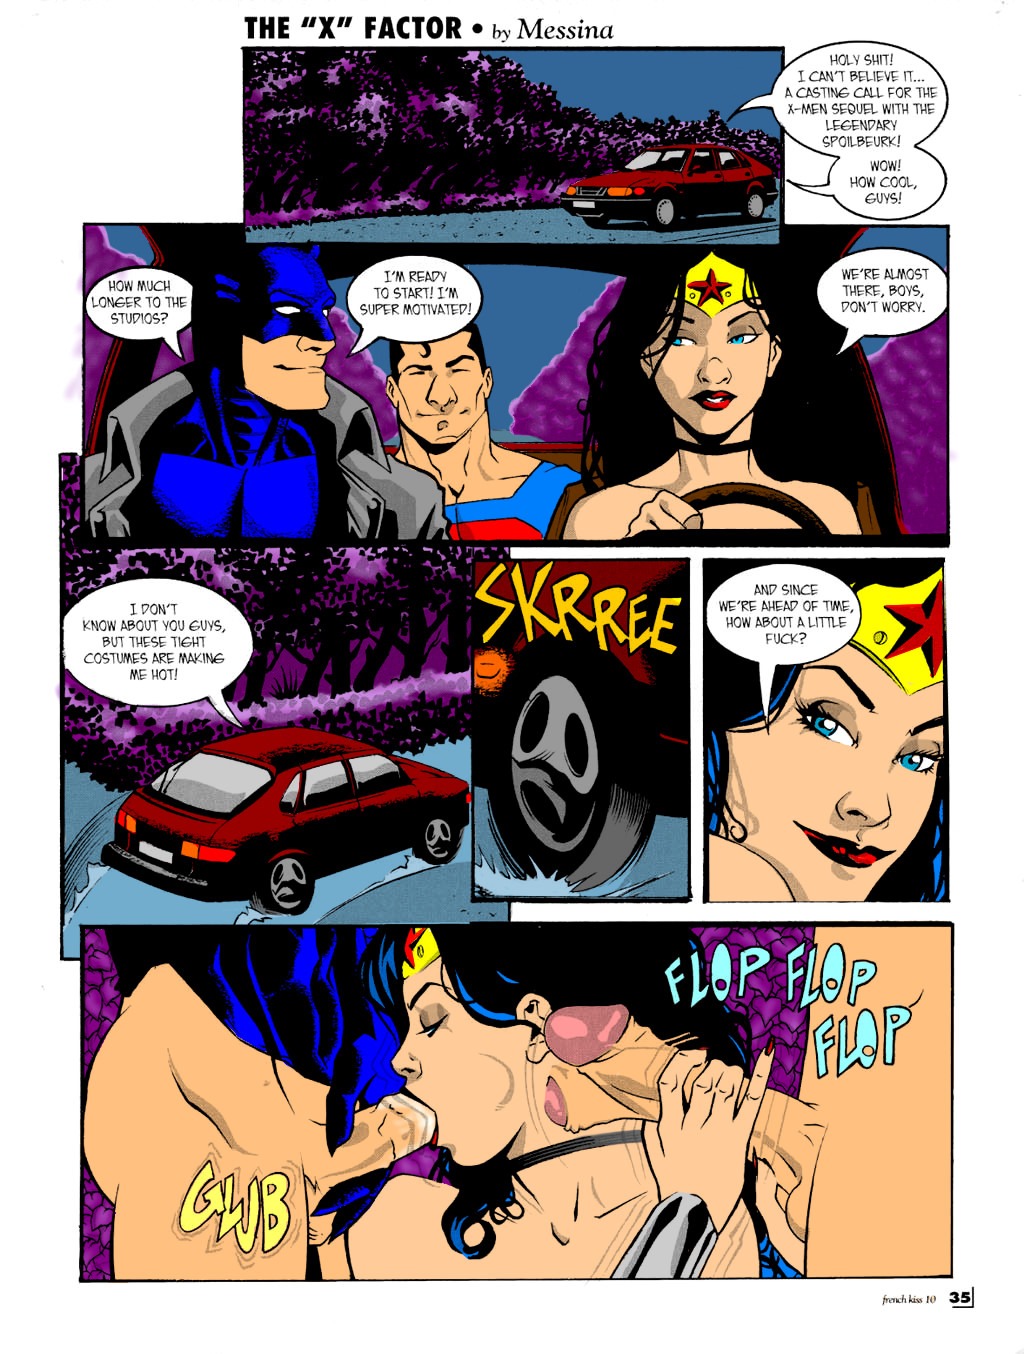 De x Factor (batman, wonder woman, superman)